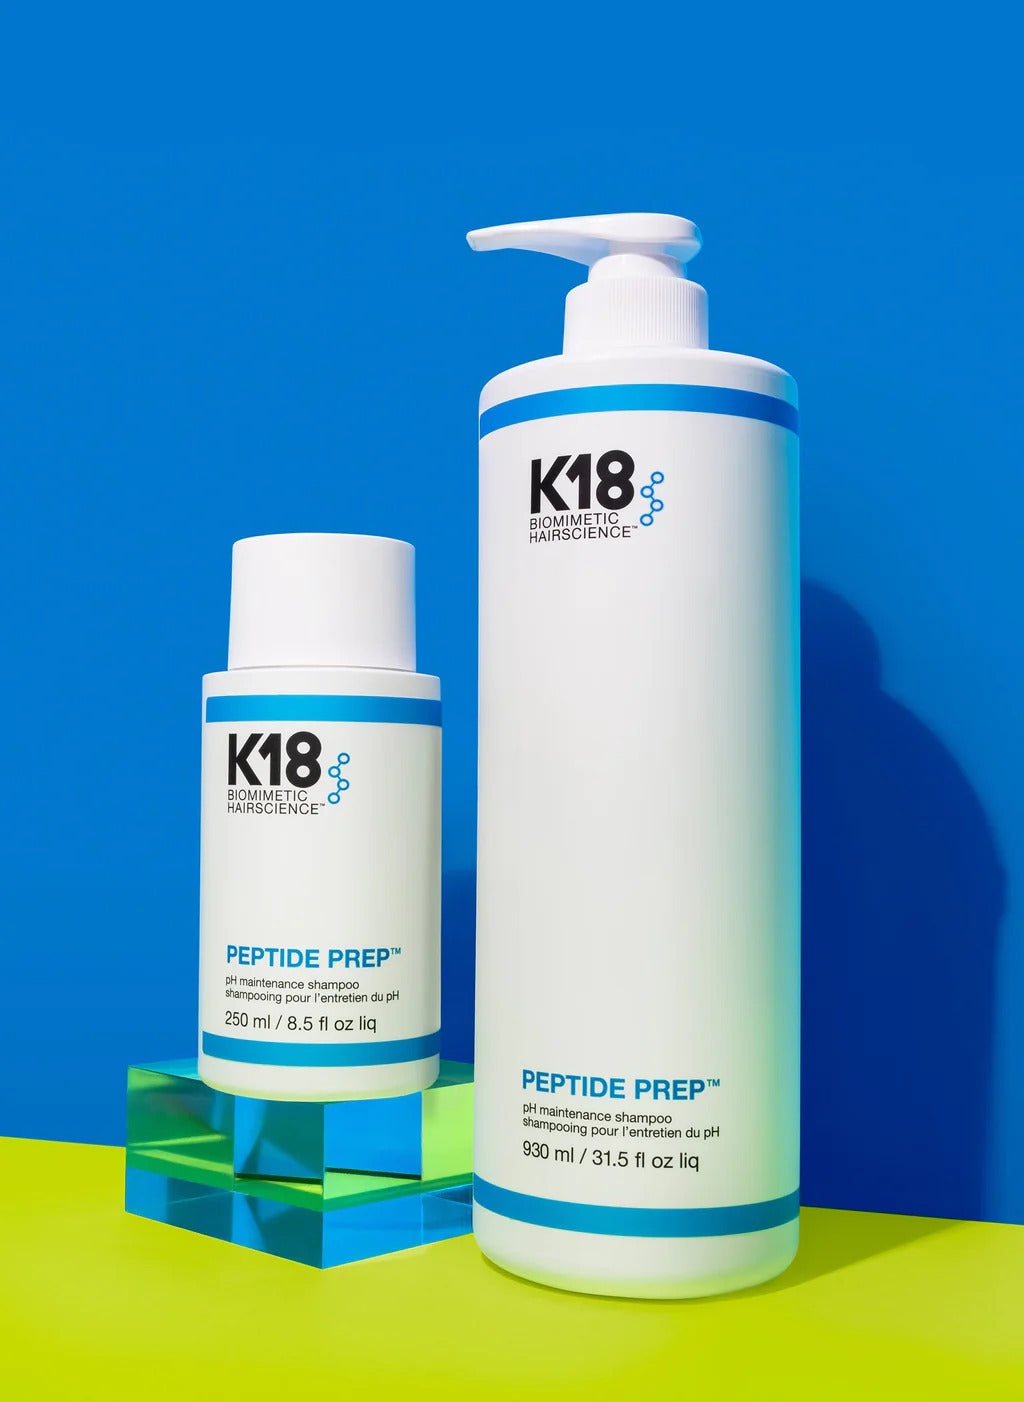 K18 Peptide Prep pH Shampoo Maintenance Shampoo Ltr 930ml/31.5oz